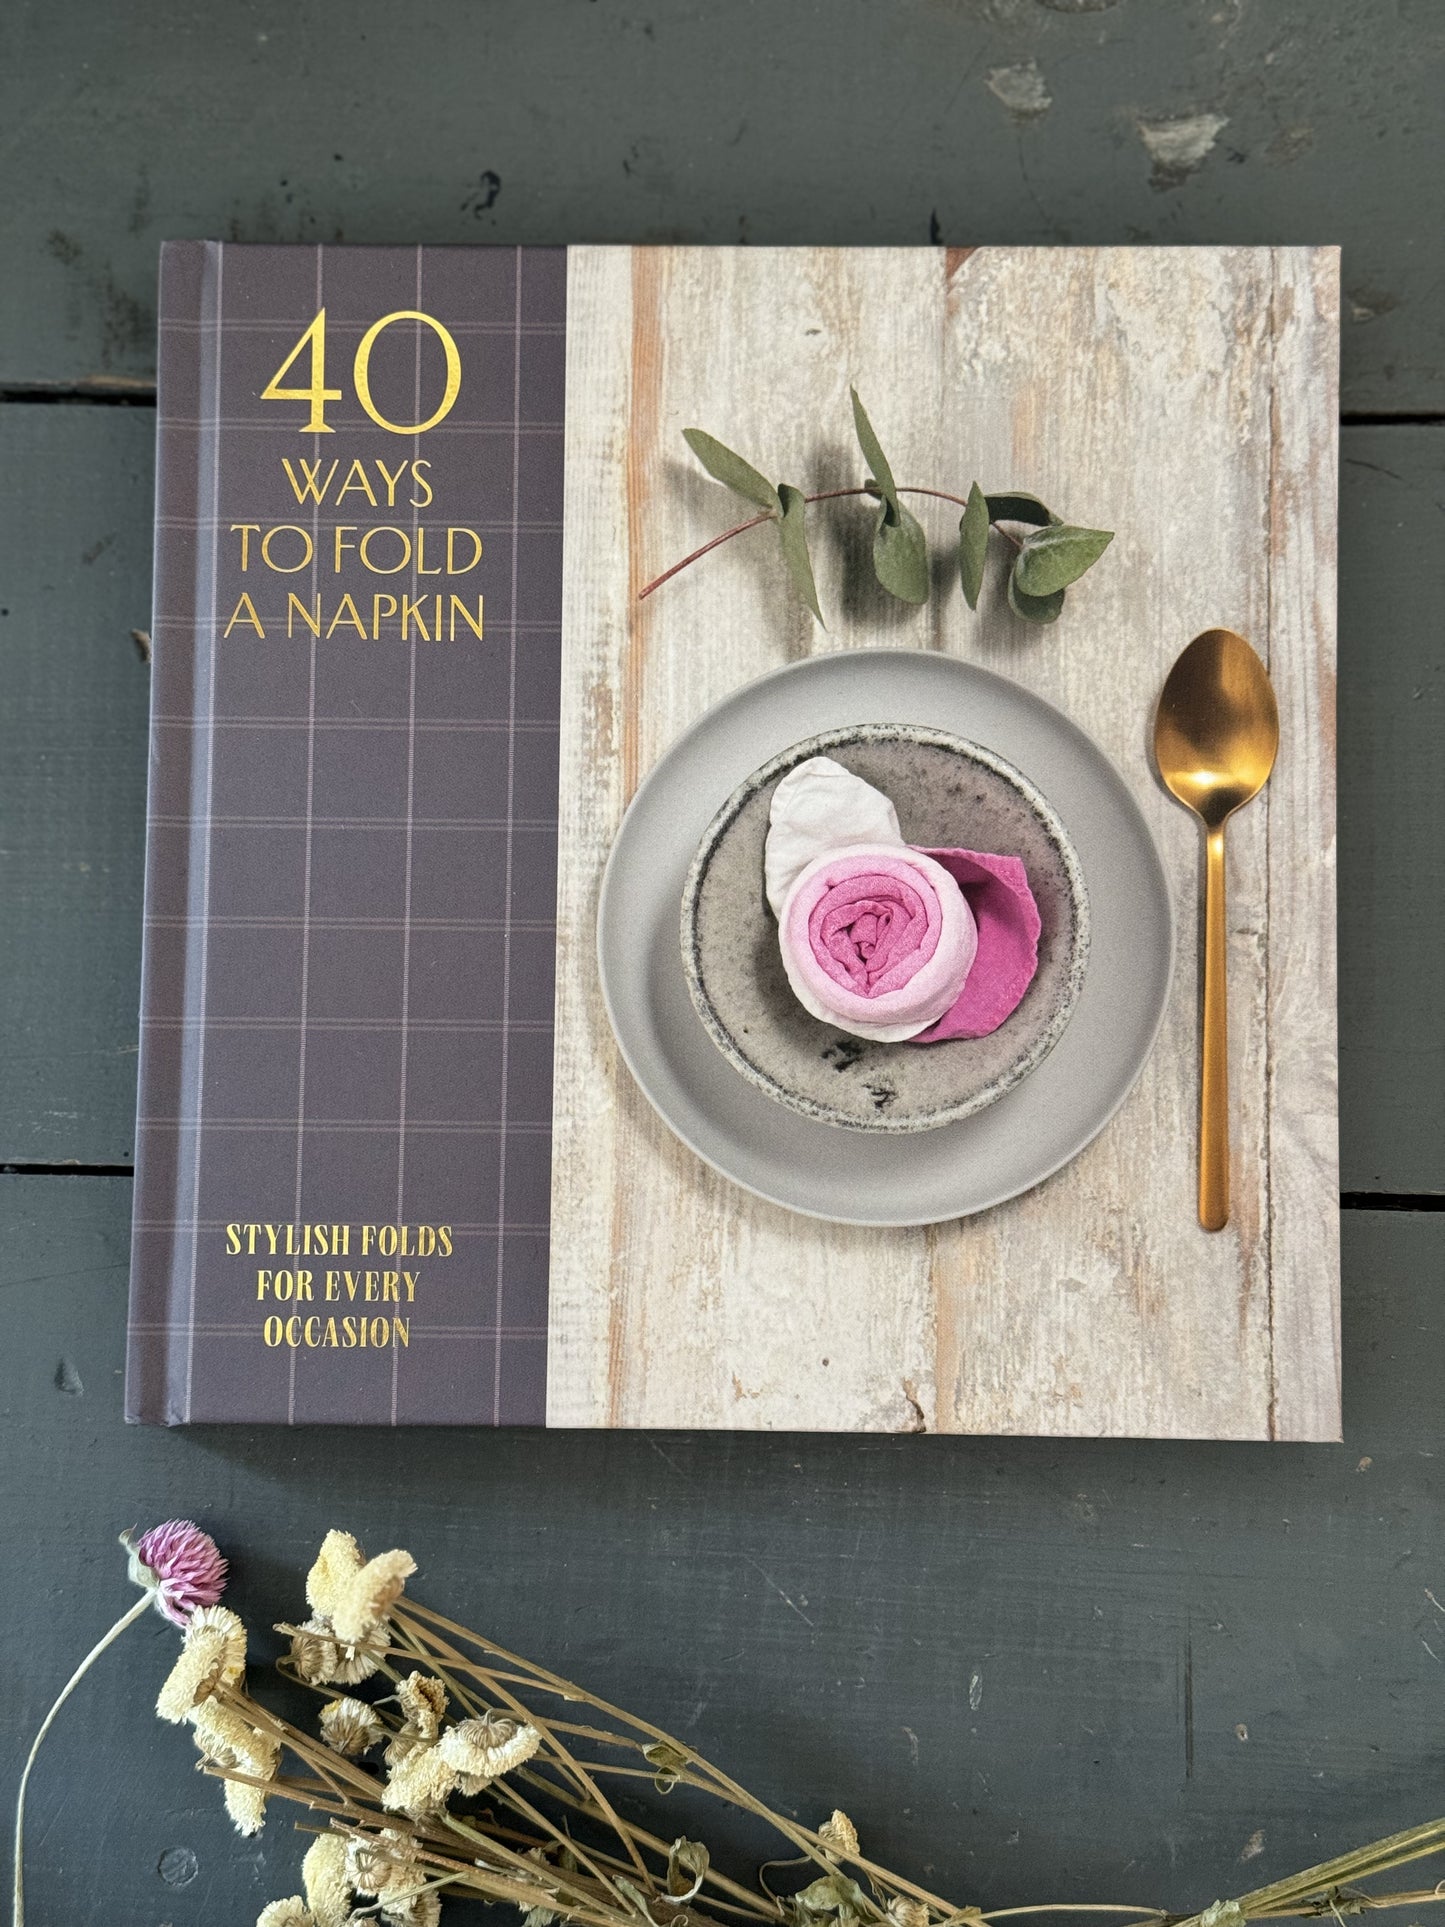 40 Ways to Fold a Napkin" Book